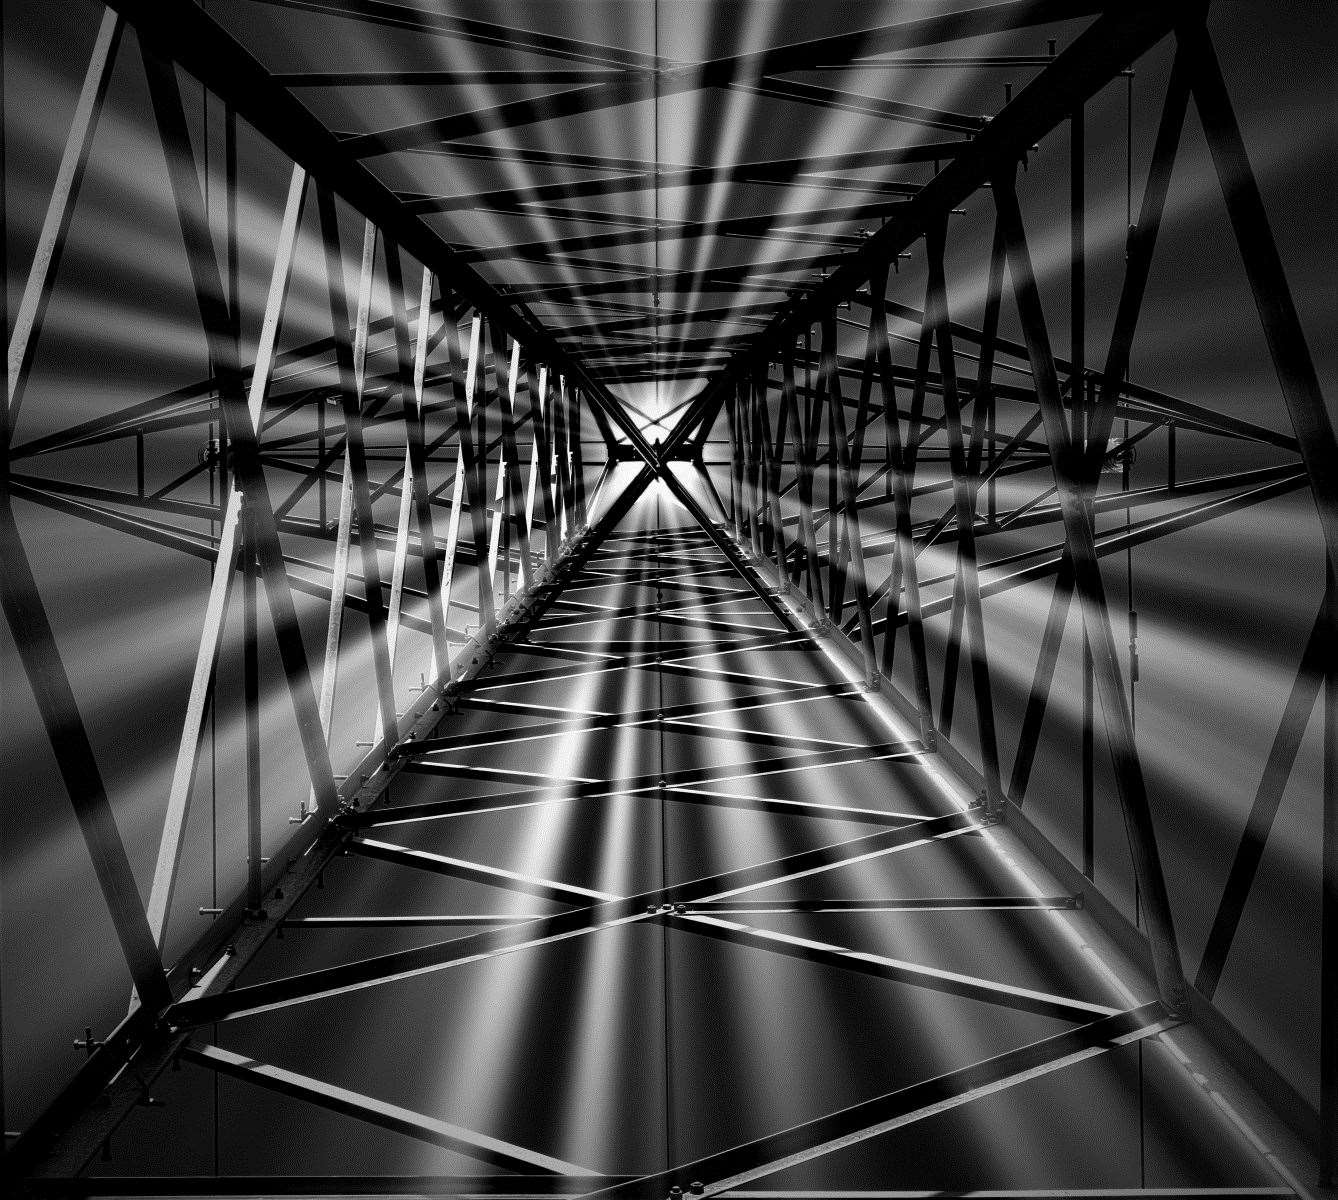 “Power Lines” by Patrick Argyle, Golspie.